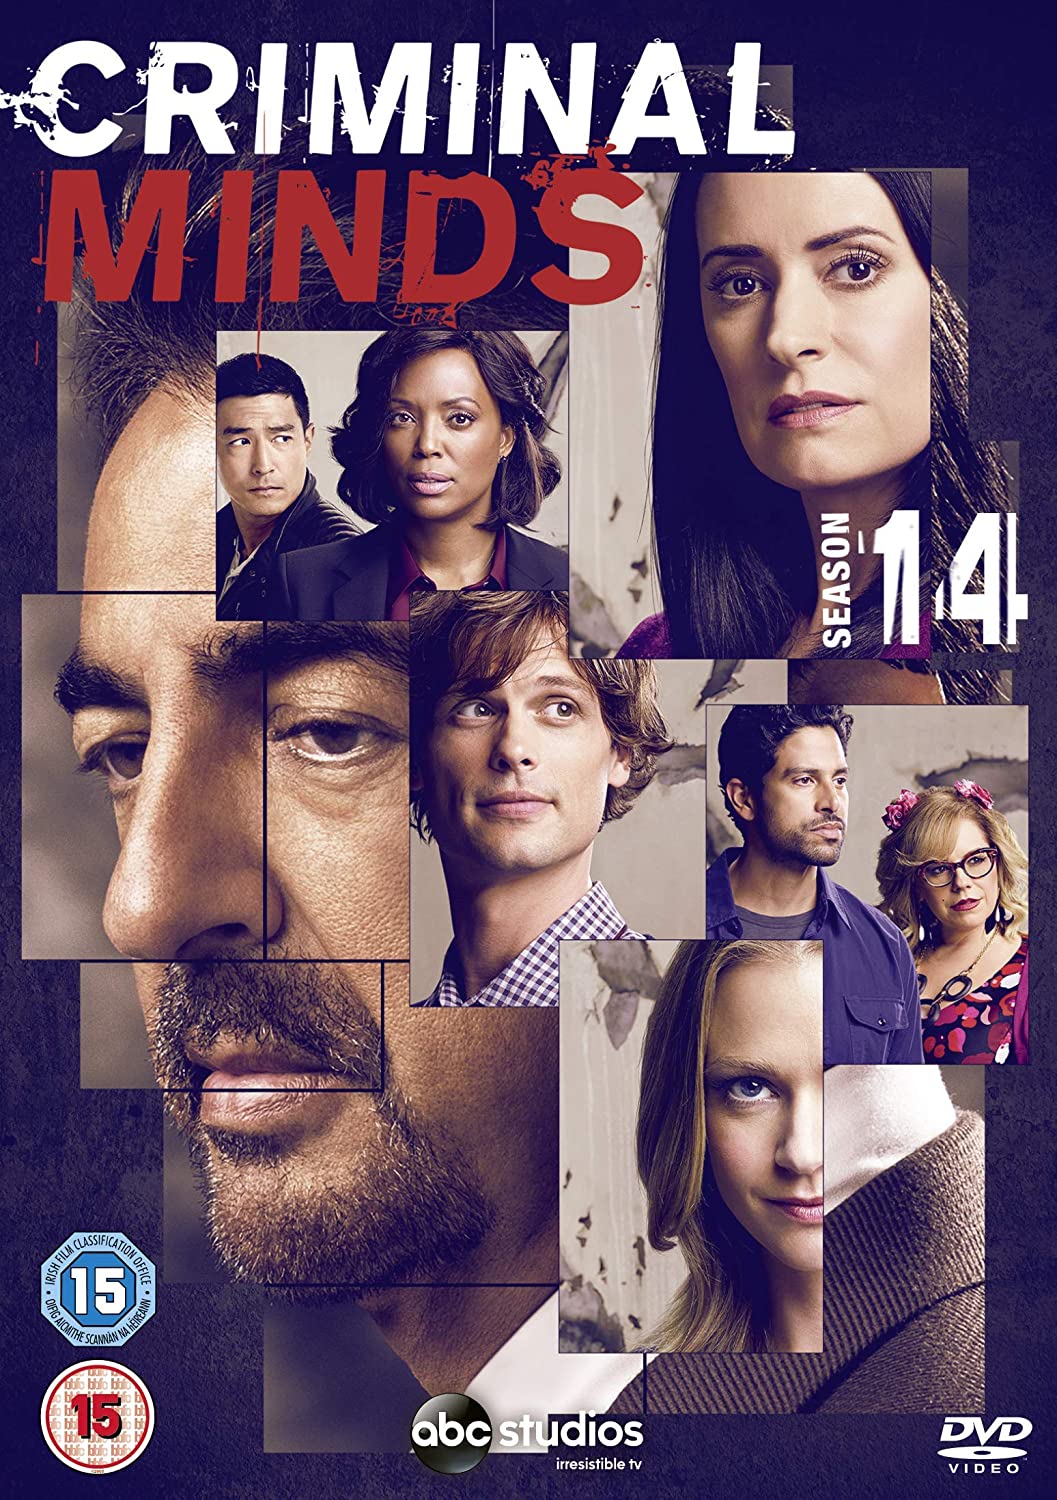 The 24 Best 'Criminal Minds' Episodes of All Time